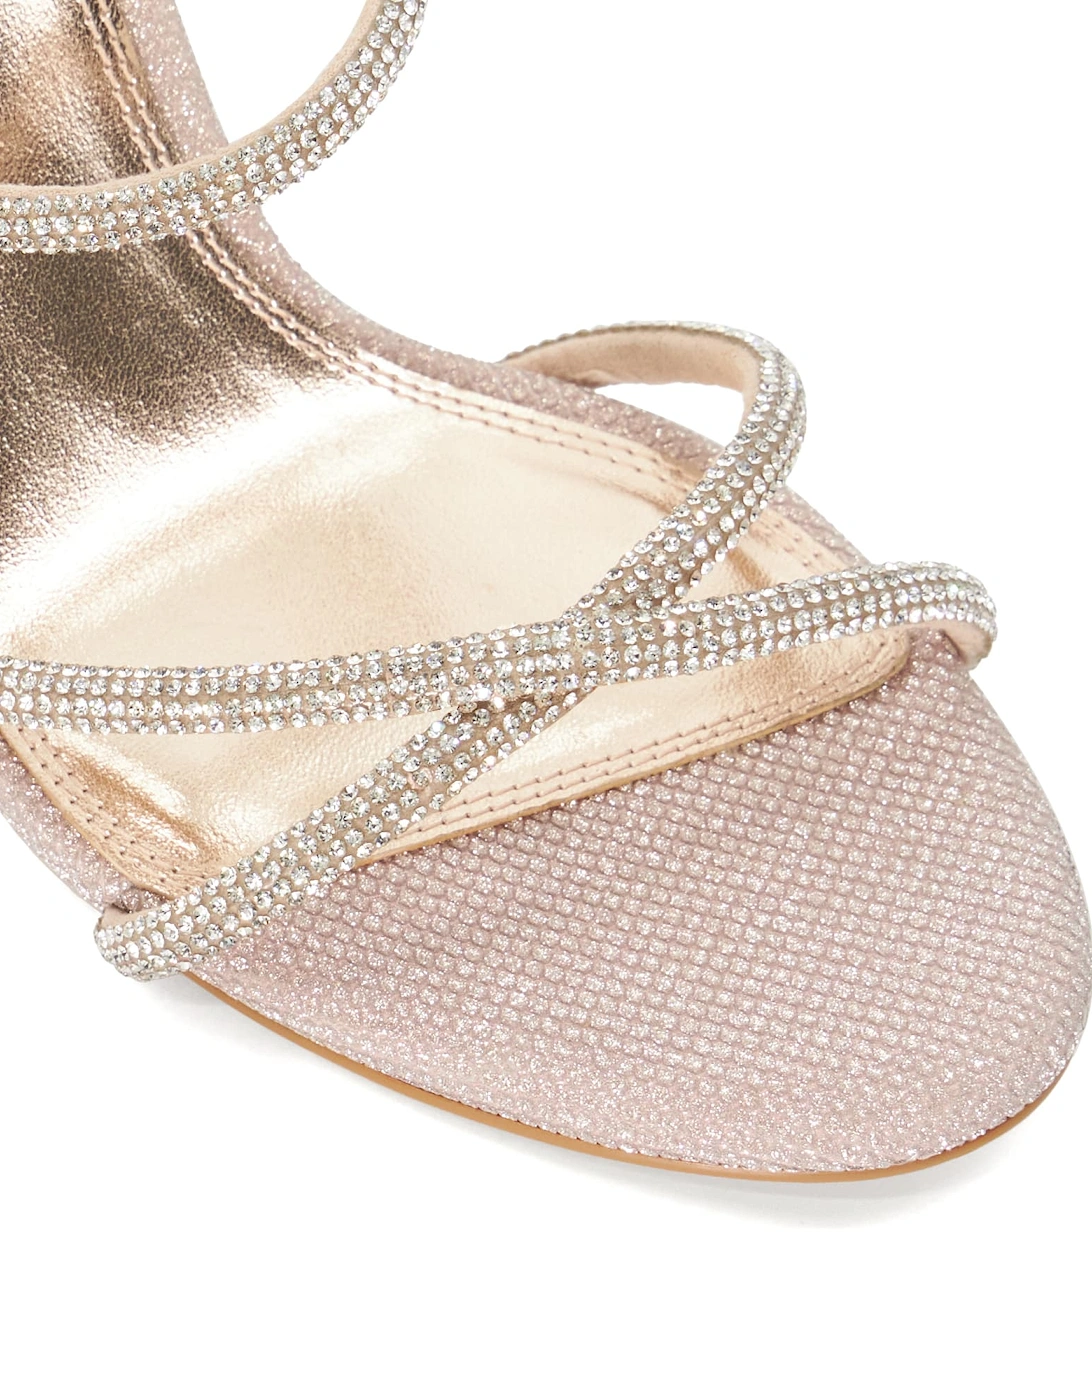 Ladies Miraculous - Embellished Strap High Heel Sandals